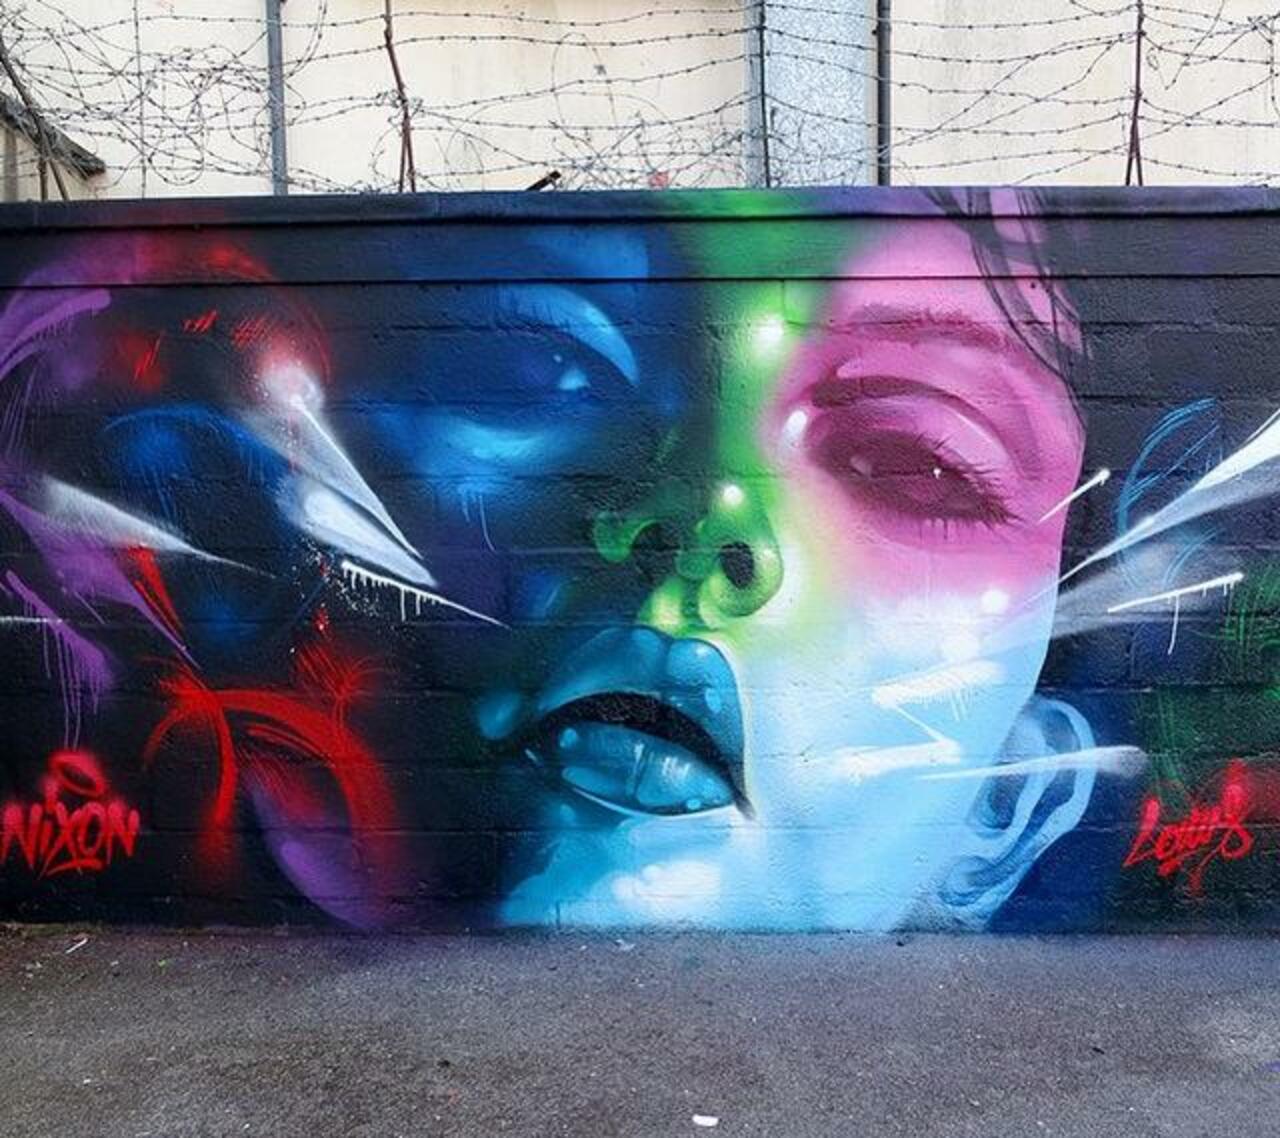 New Street Art by rmerism in Cardiff 

#art #arte #graffiti #streetart http://t.co/4H1saFJMg7